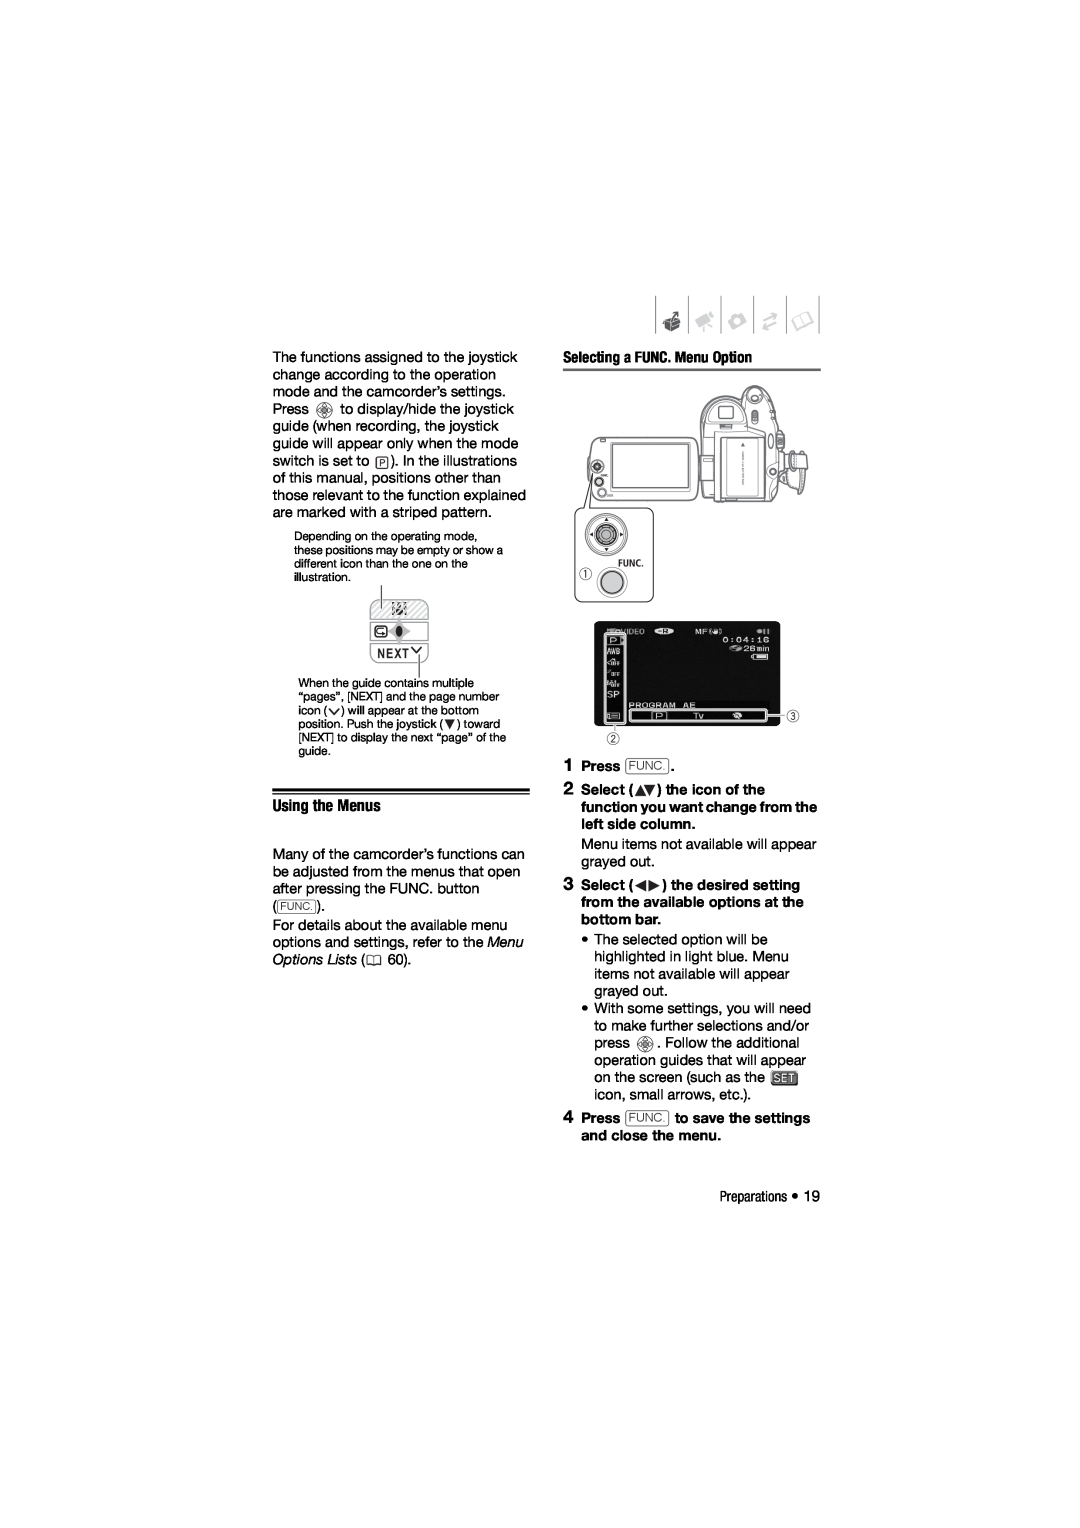 Canon DC311, 310, DC301 instruction manual Using the Menus, Options Lists, Selecting a FUNC. Menu Option 1 Press 